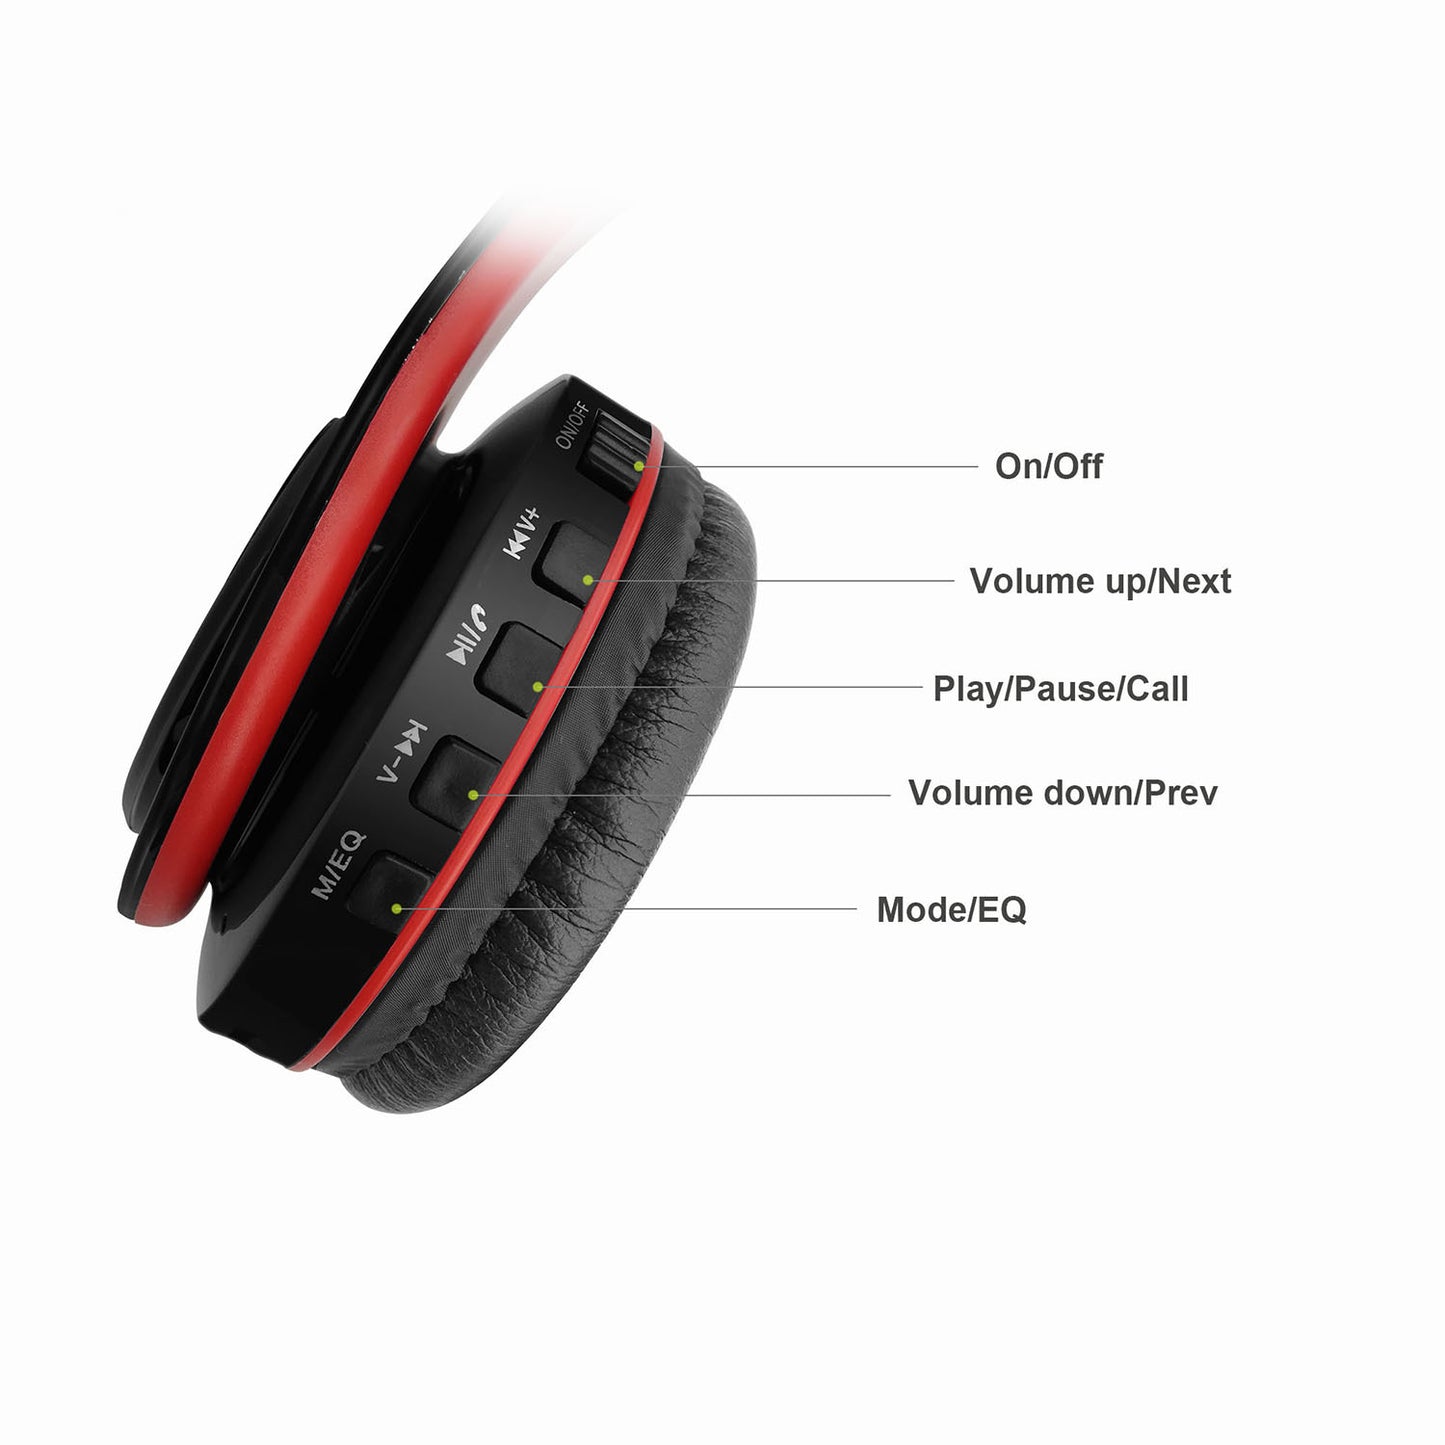 Compatible with Apple , Trending amazon wireless headset bluetooth headphones